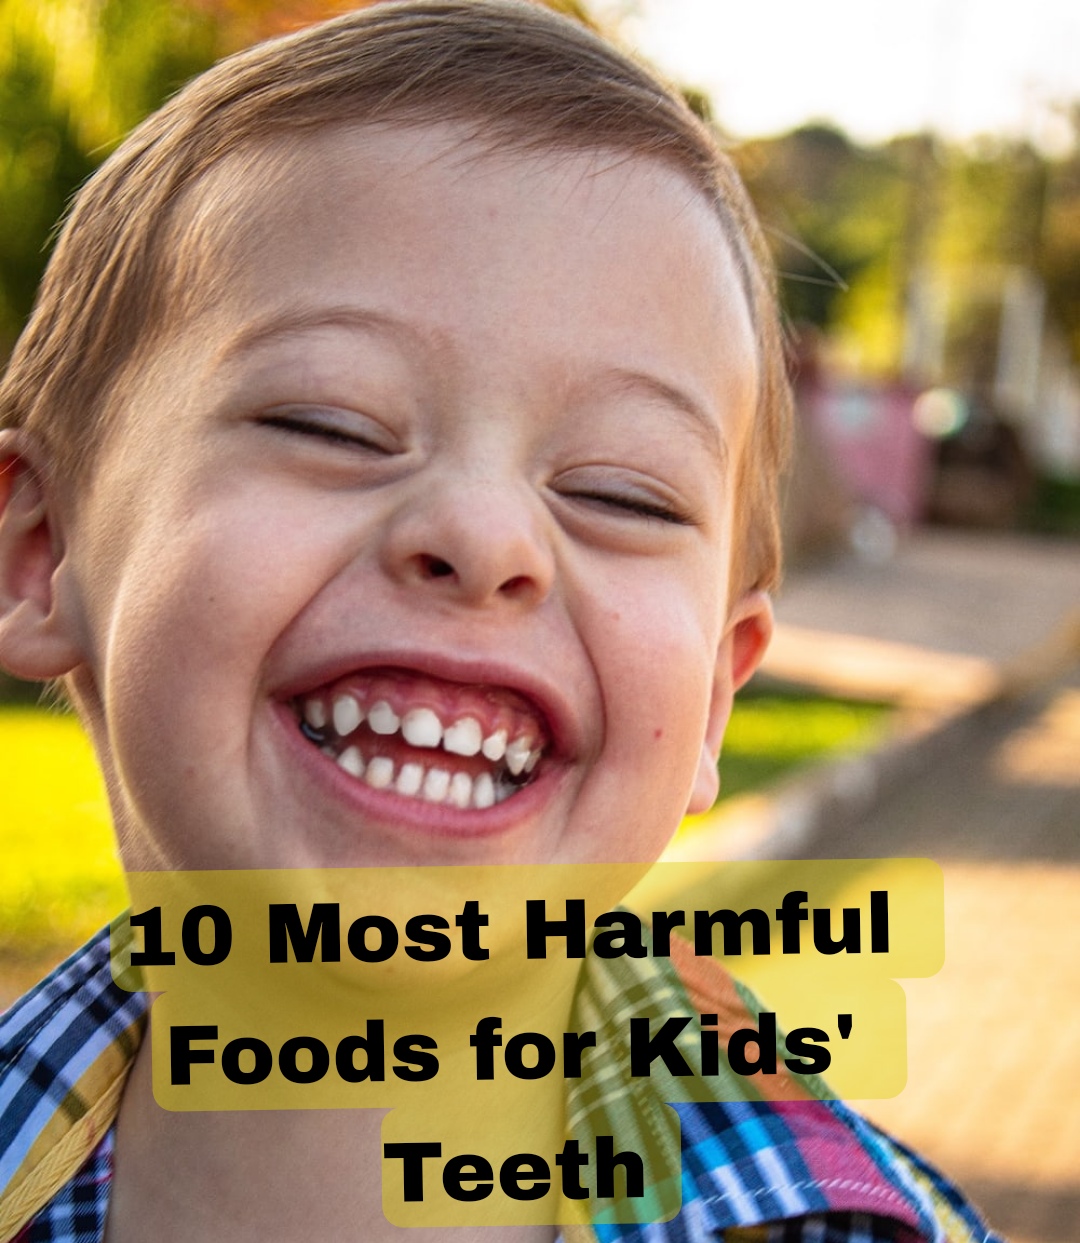 10 Most Harmful Foods for Kids’ Teeth